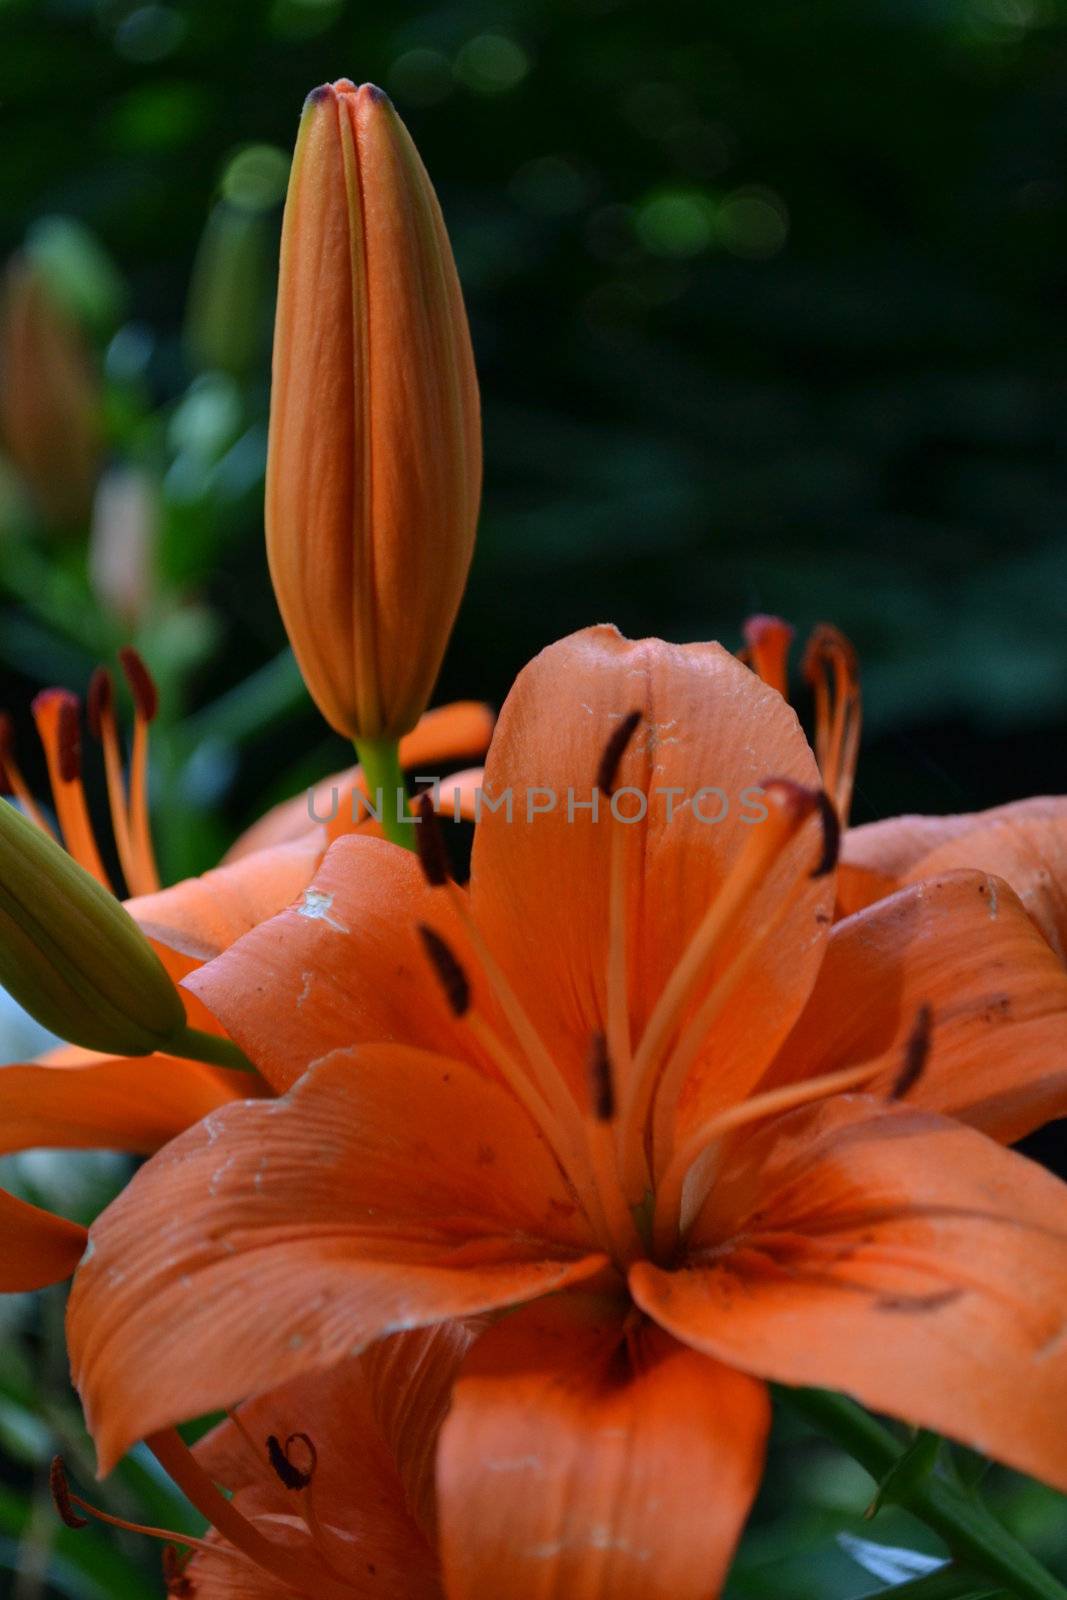 The orange lily by Autre